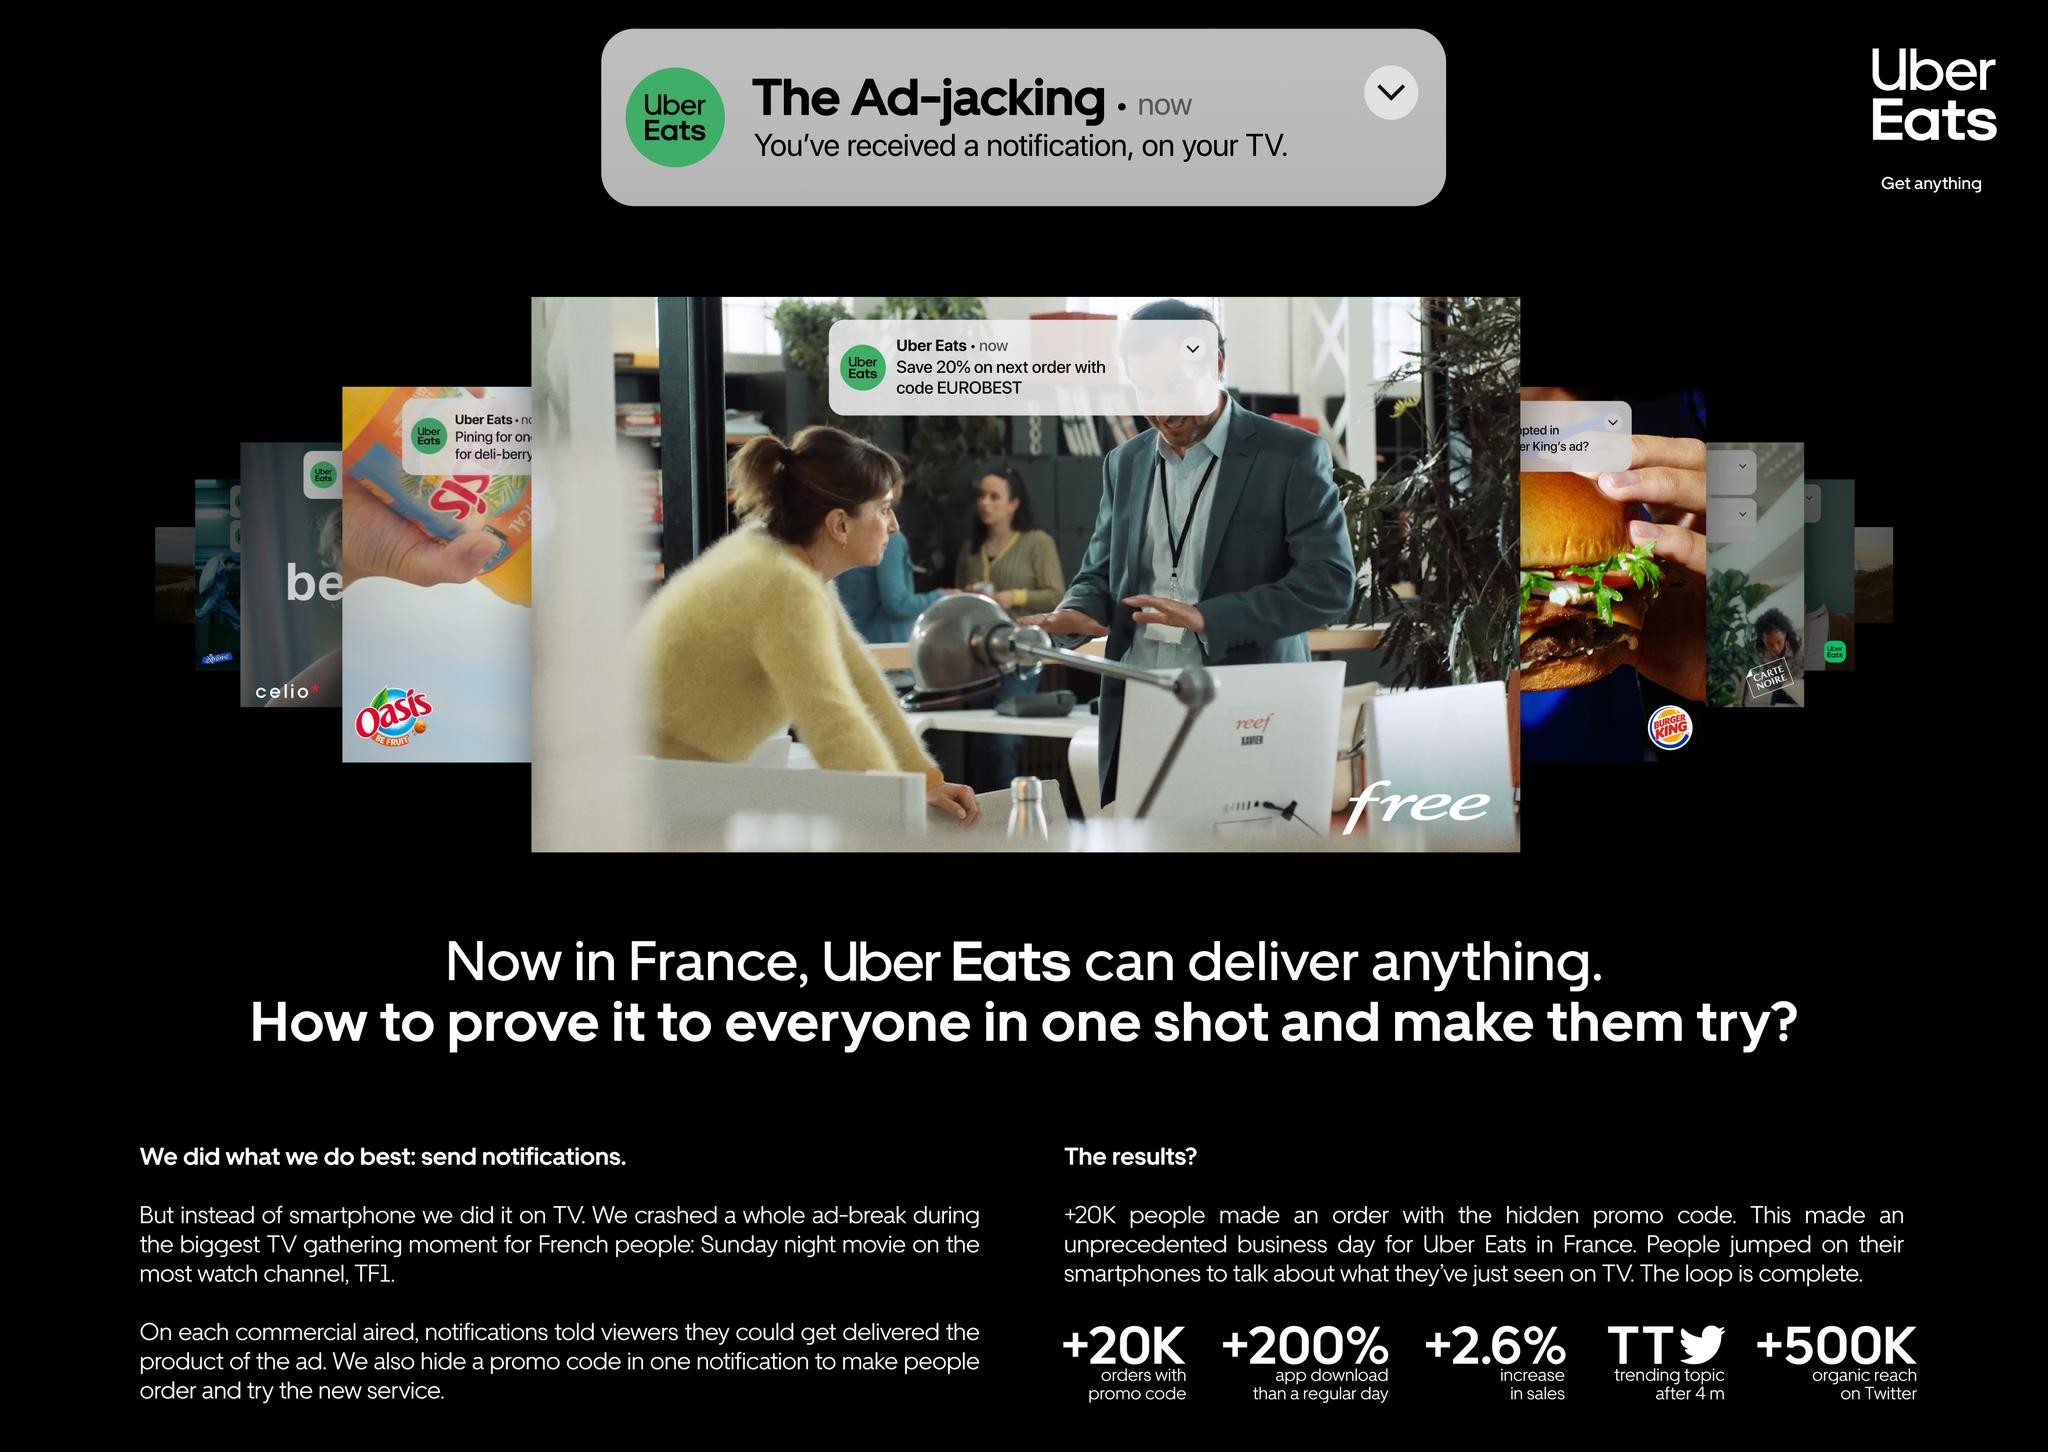 Uber Eats - The Ad-jacking